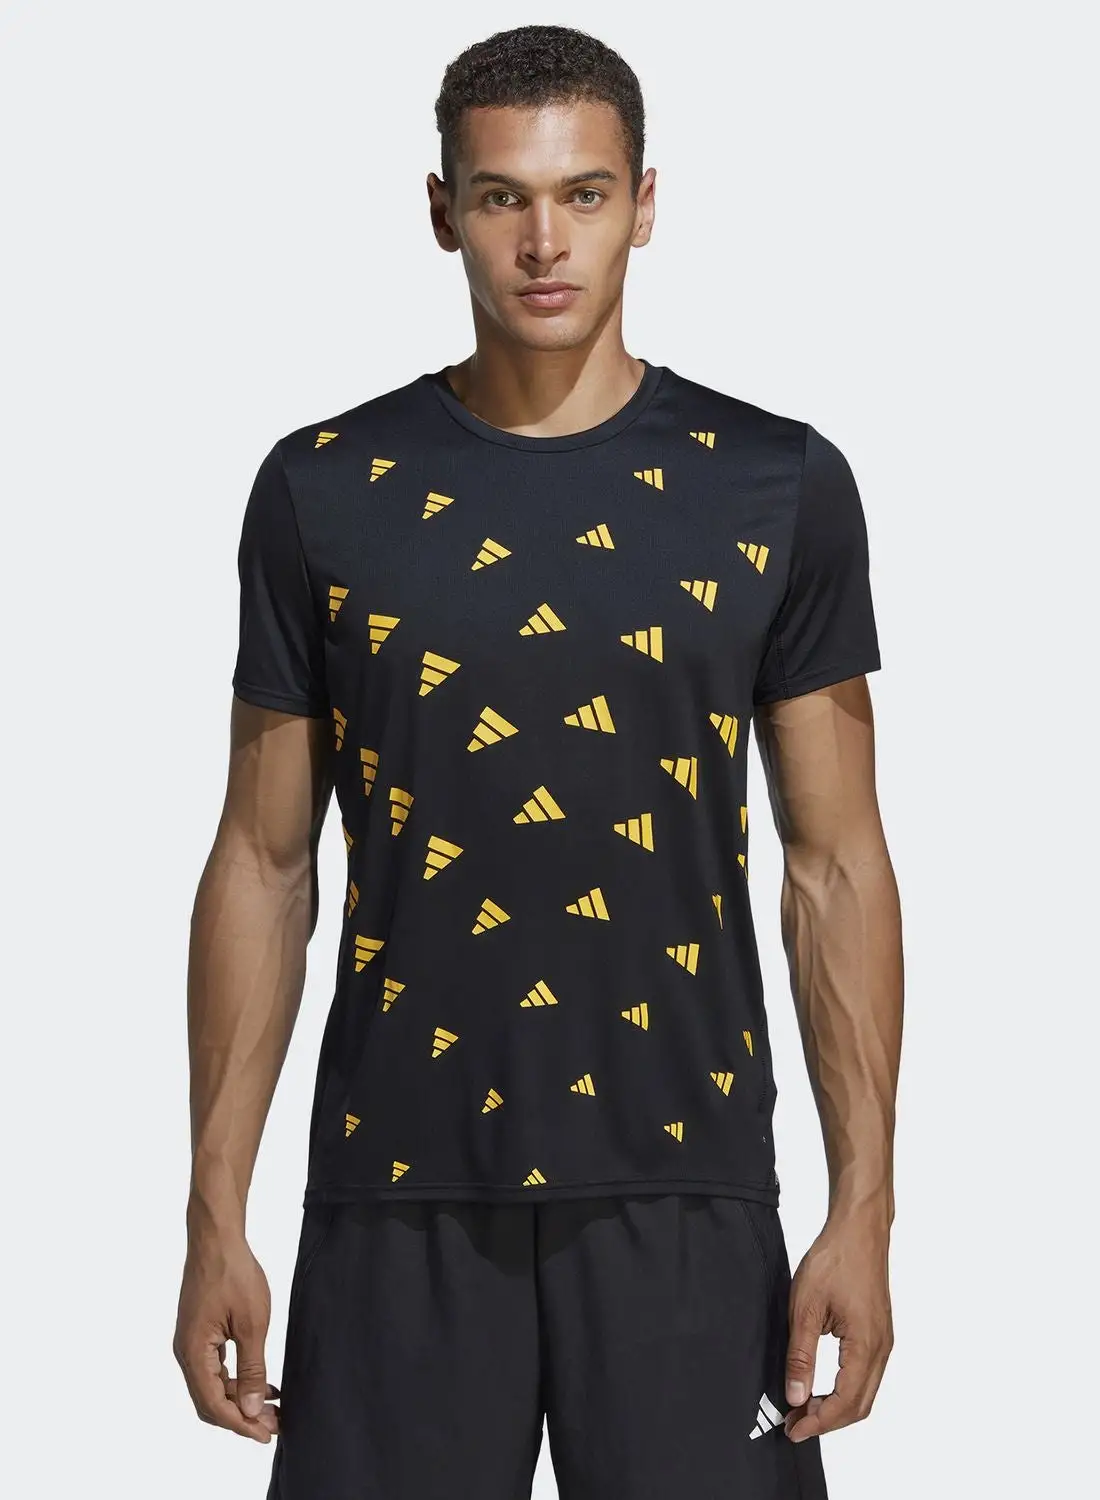 Adidas Brand Love Graphic T-Shirt